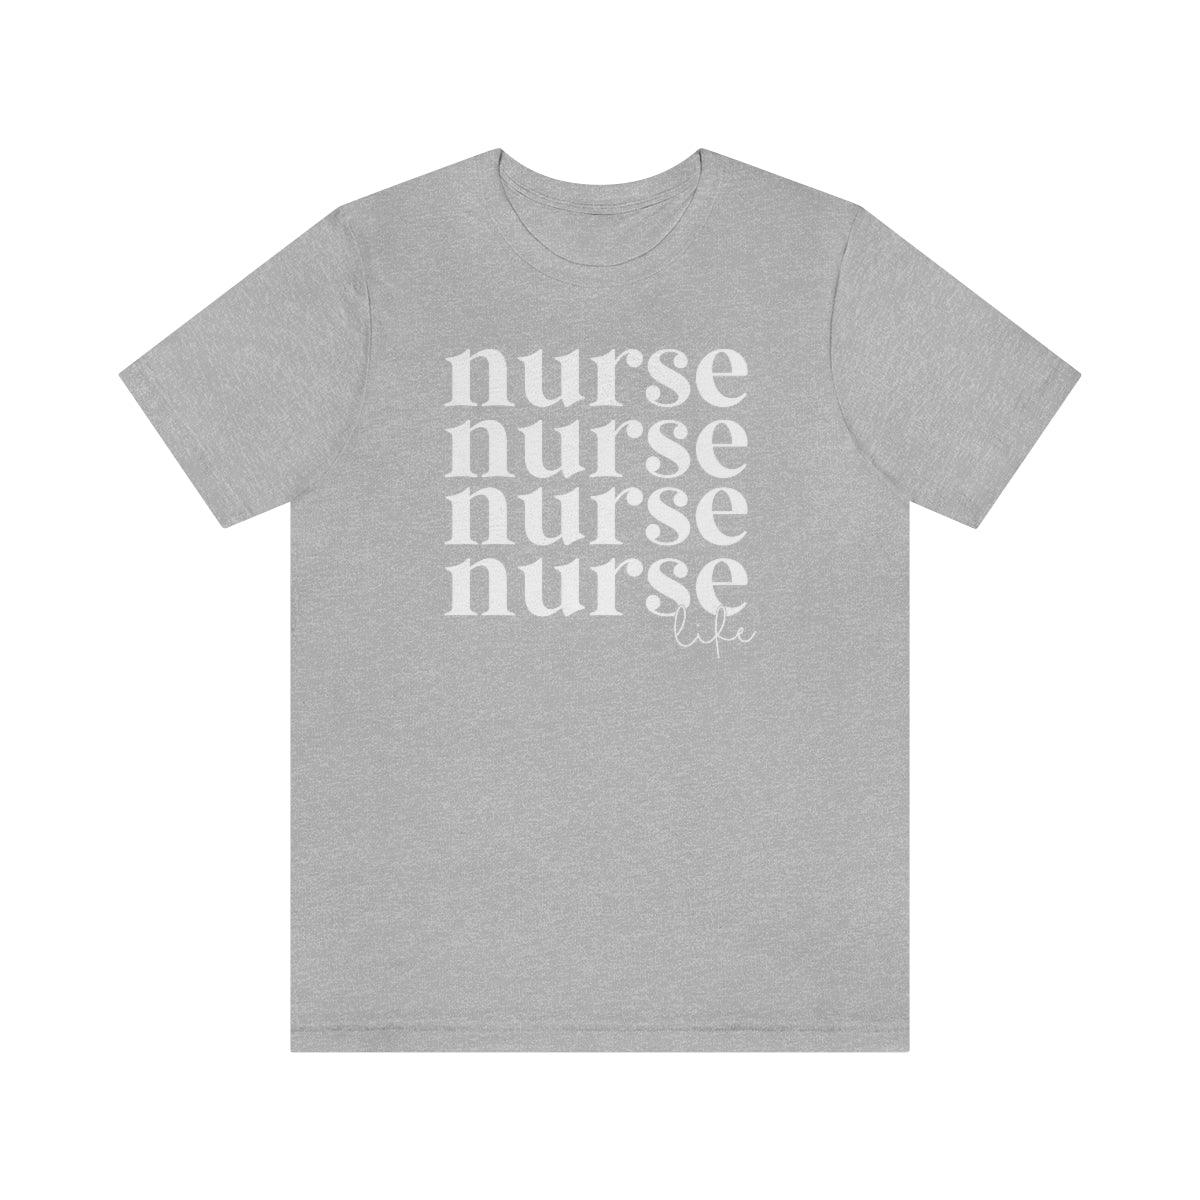 Nurse Life Short Sleeve Tee - Crystal Rose Design Co.